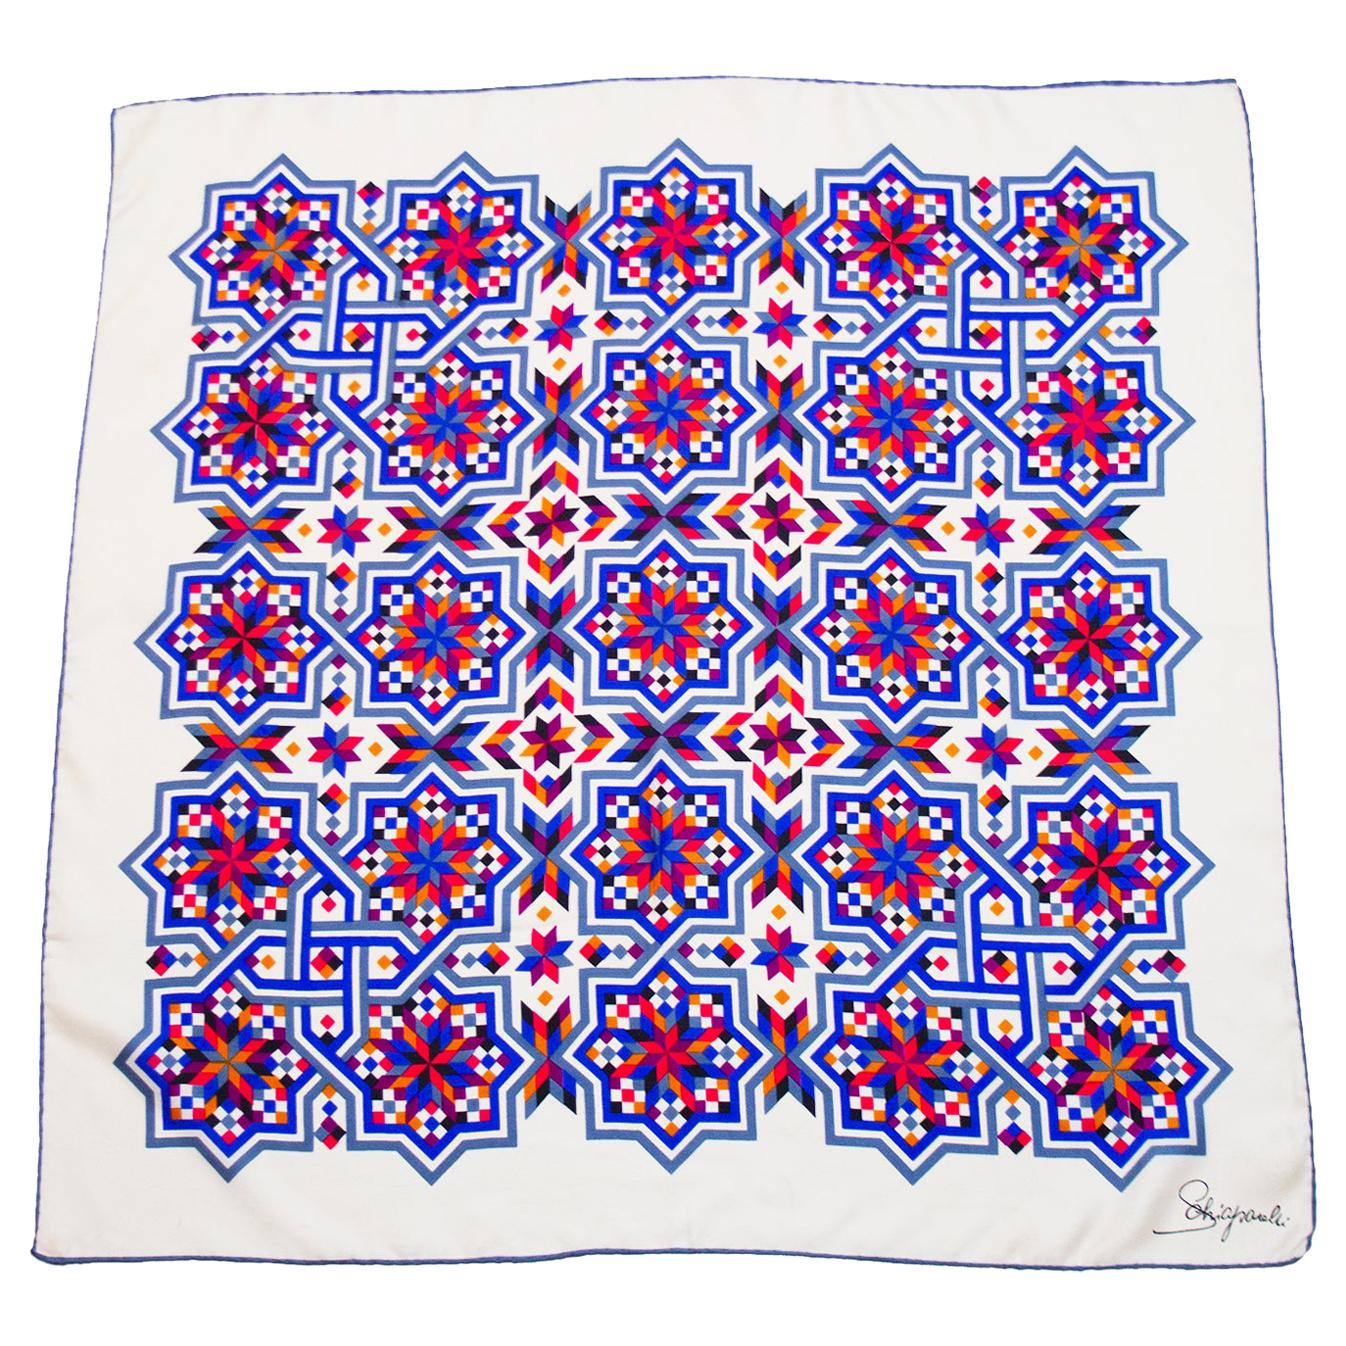 1980s Schiaparelli Geometric Star Print Silk Scarf 